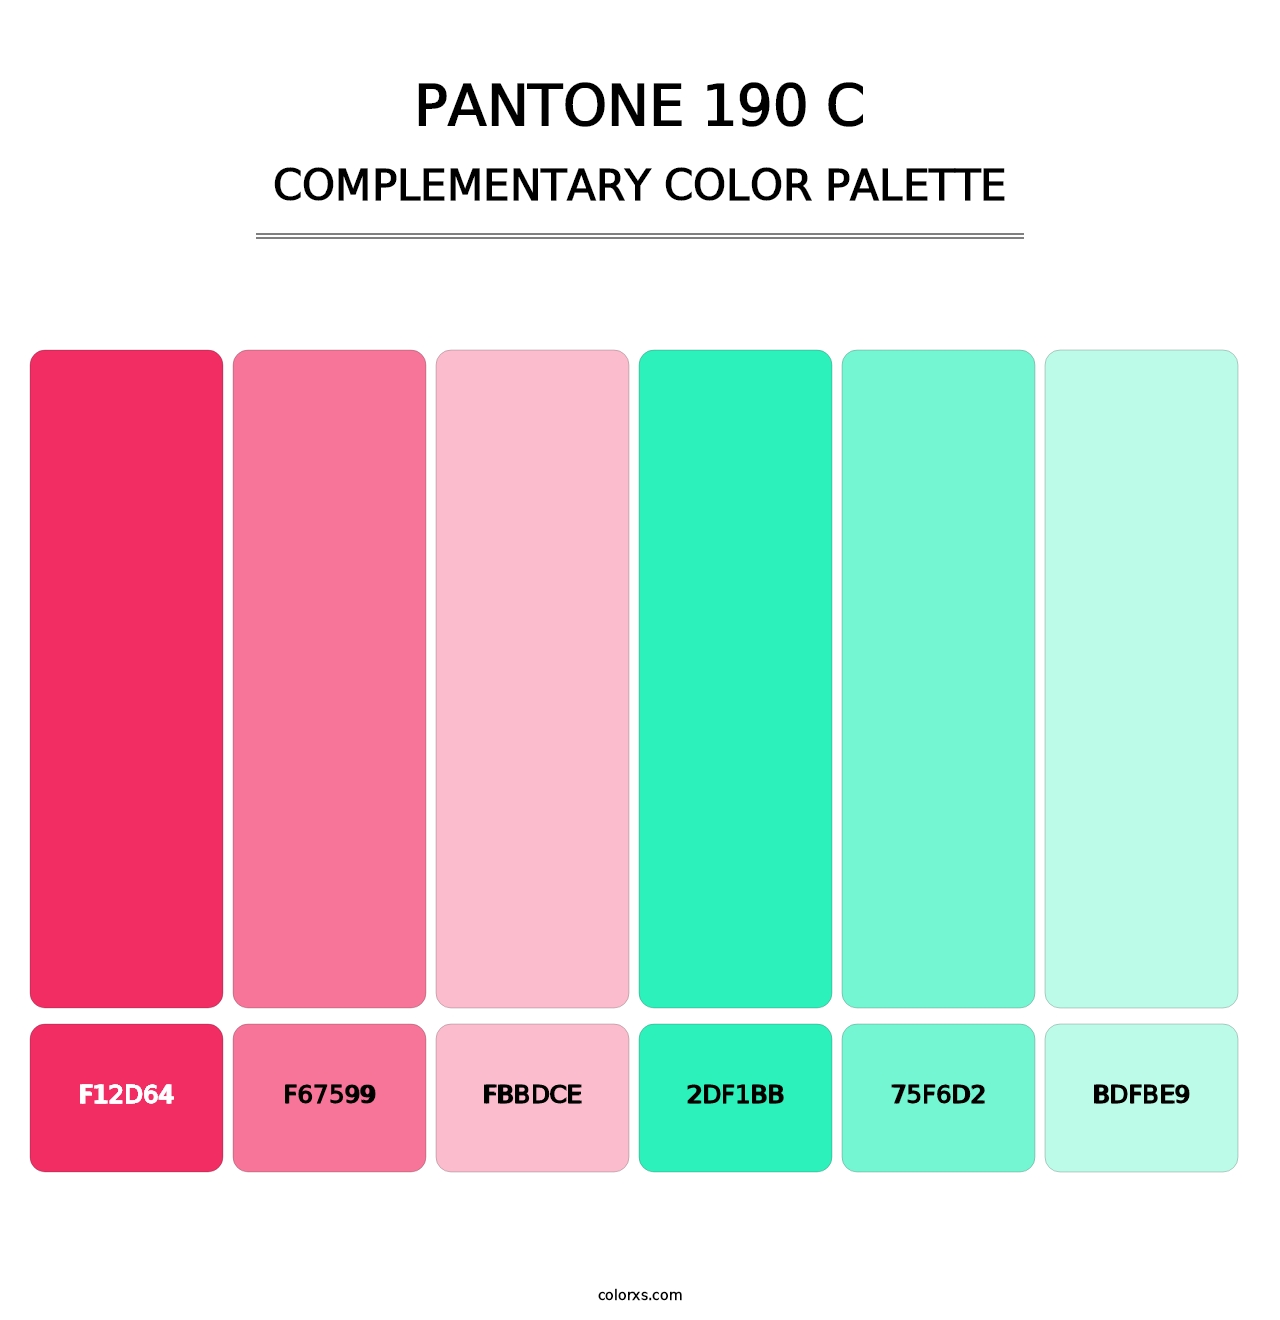 PANTONE 190 C - Complementary Color Palette